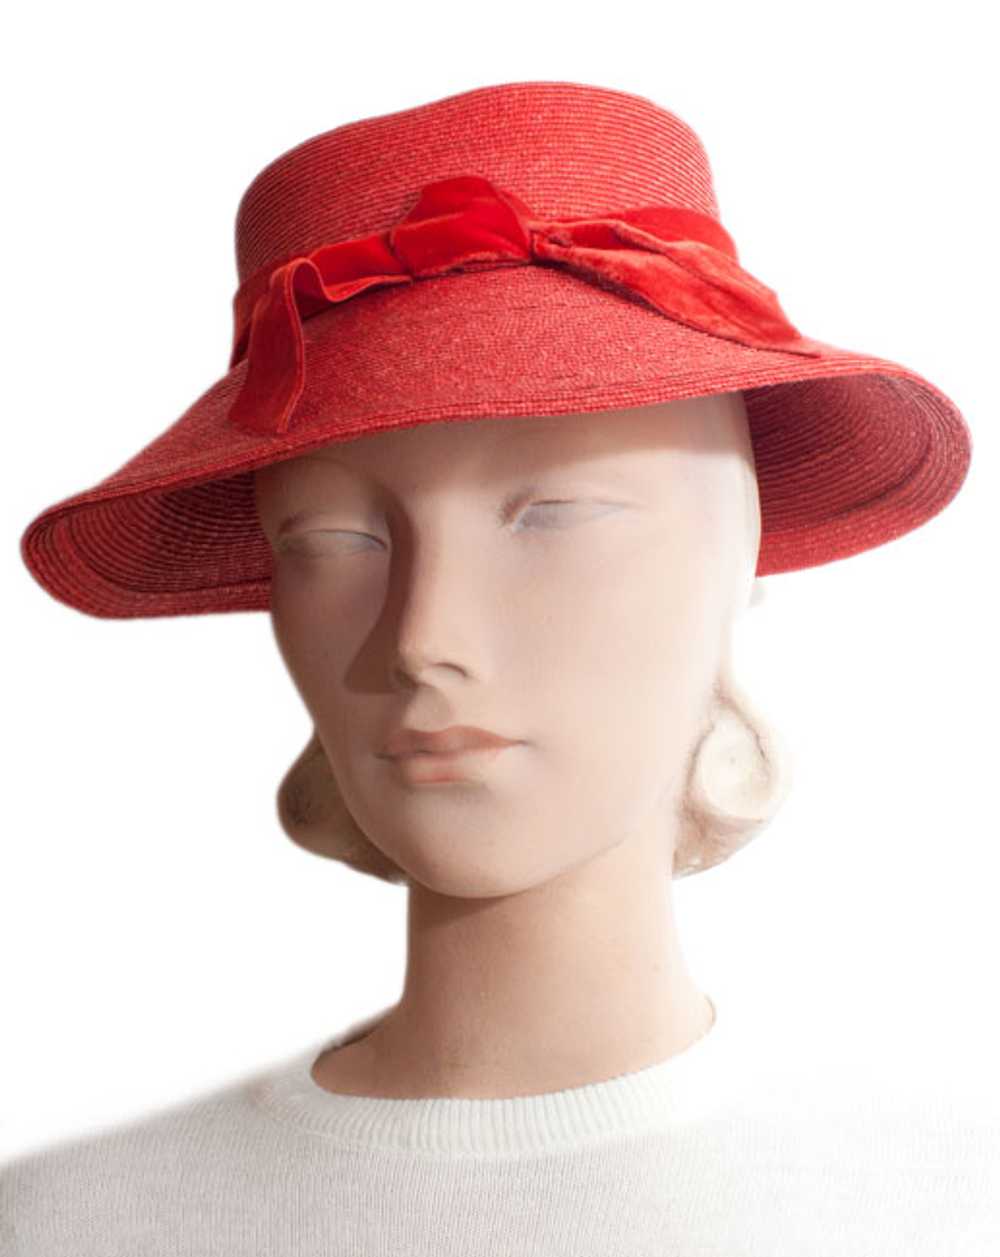 1960s Elsa Schiaparelli Straw Hat - image 1